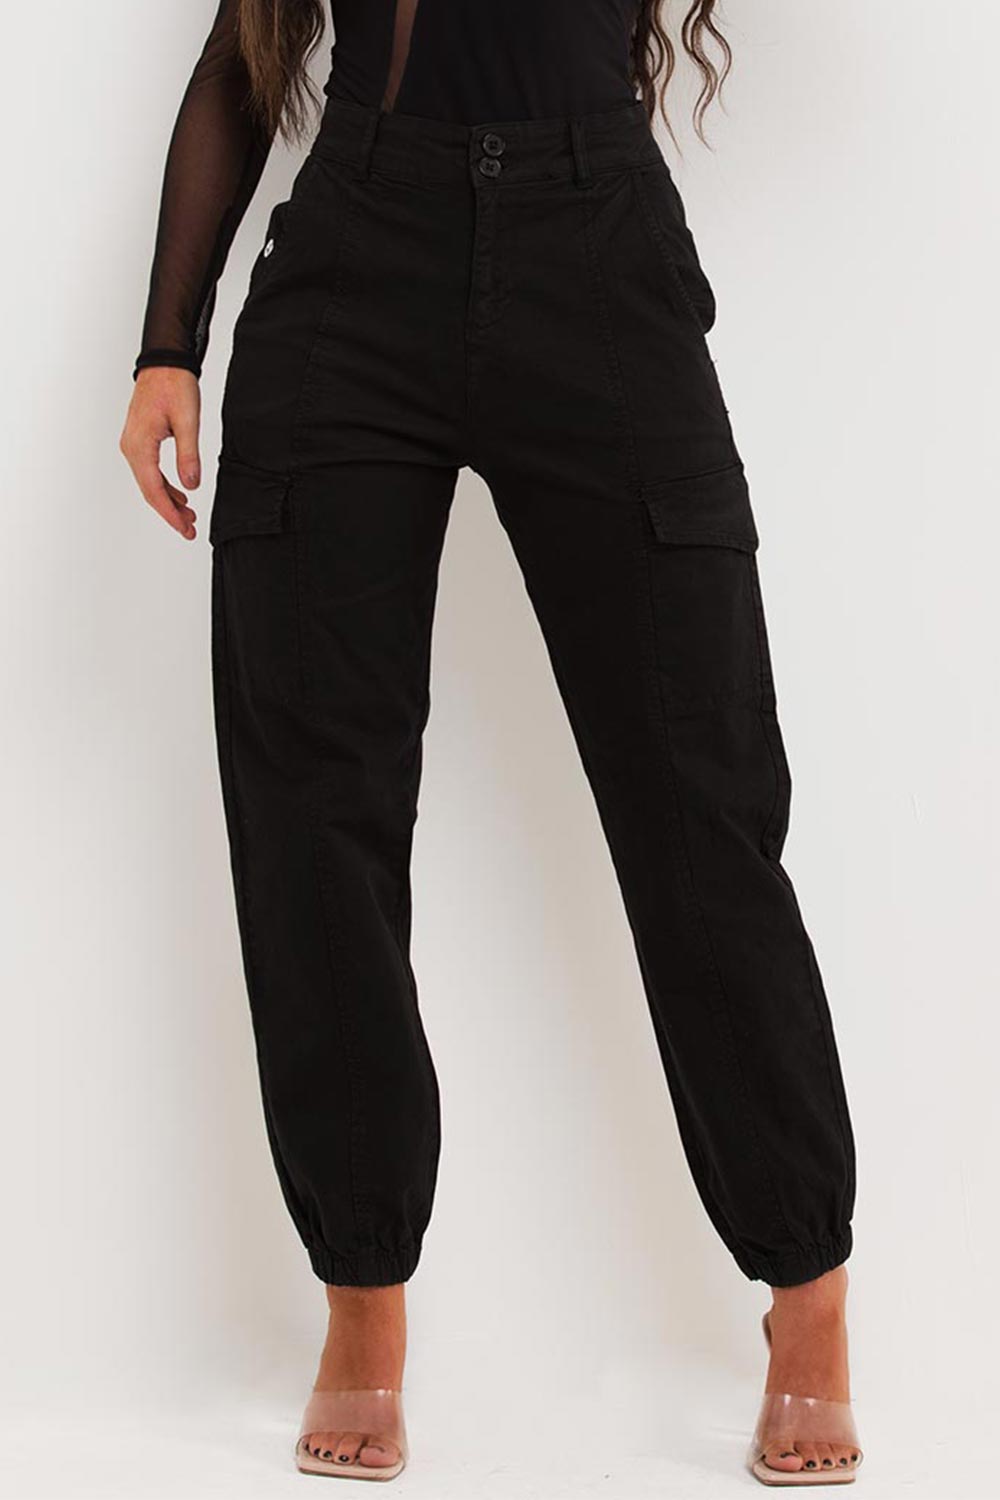 pu-leather-bodysuit-with-cup -detail-black-styledup-fashion_600x.jpg?v=1666442579